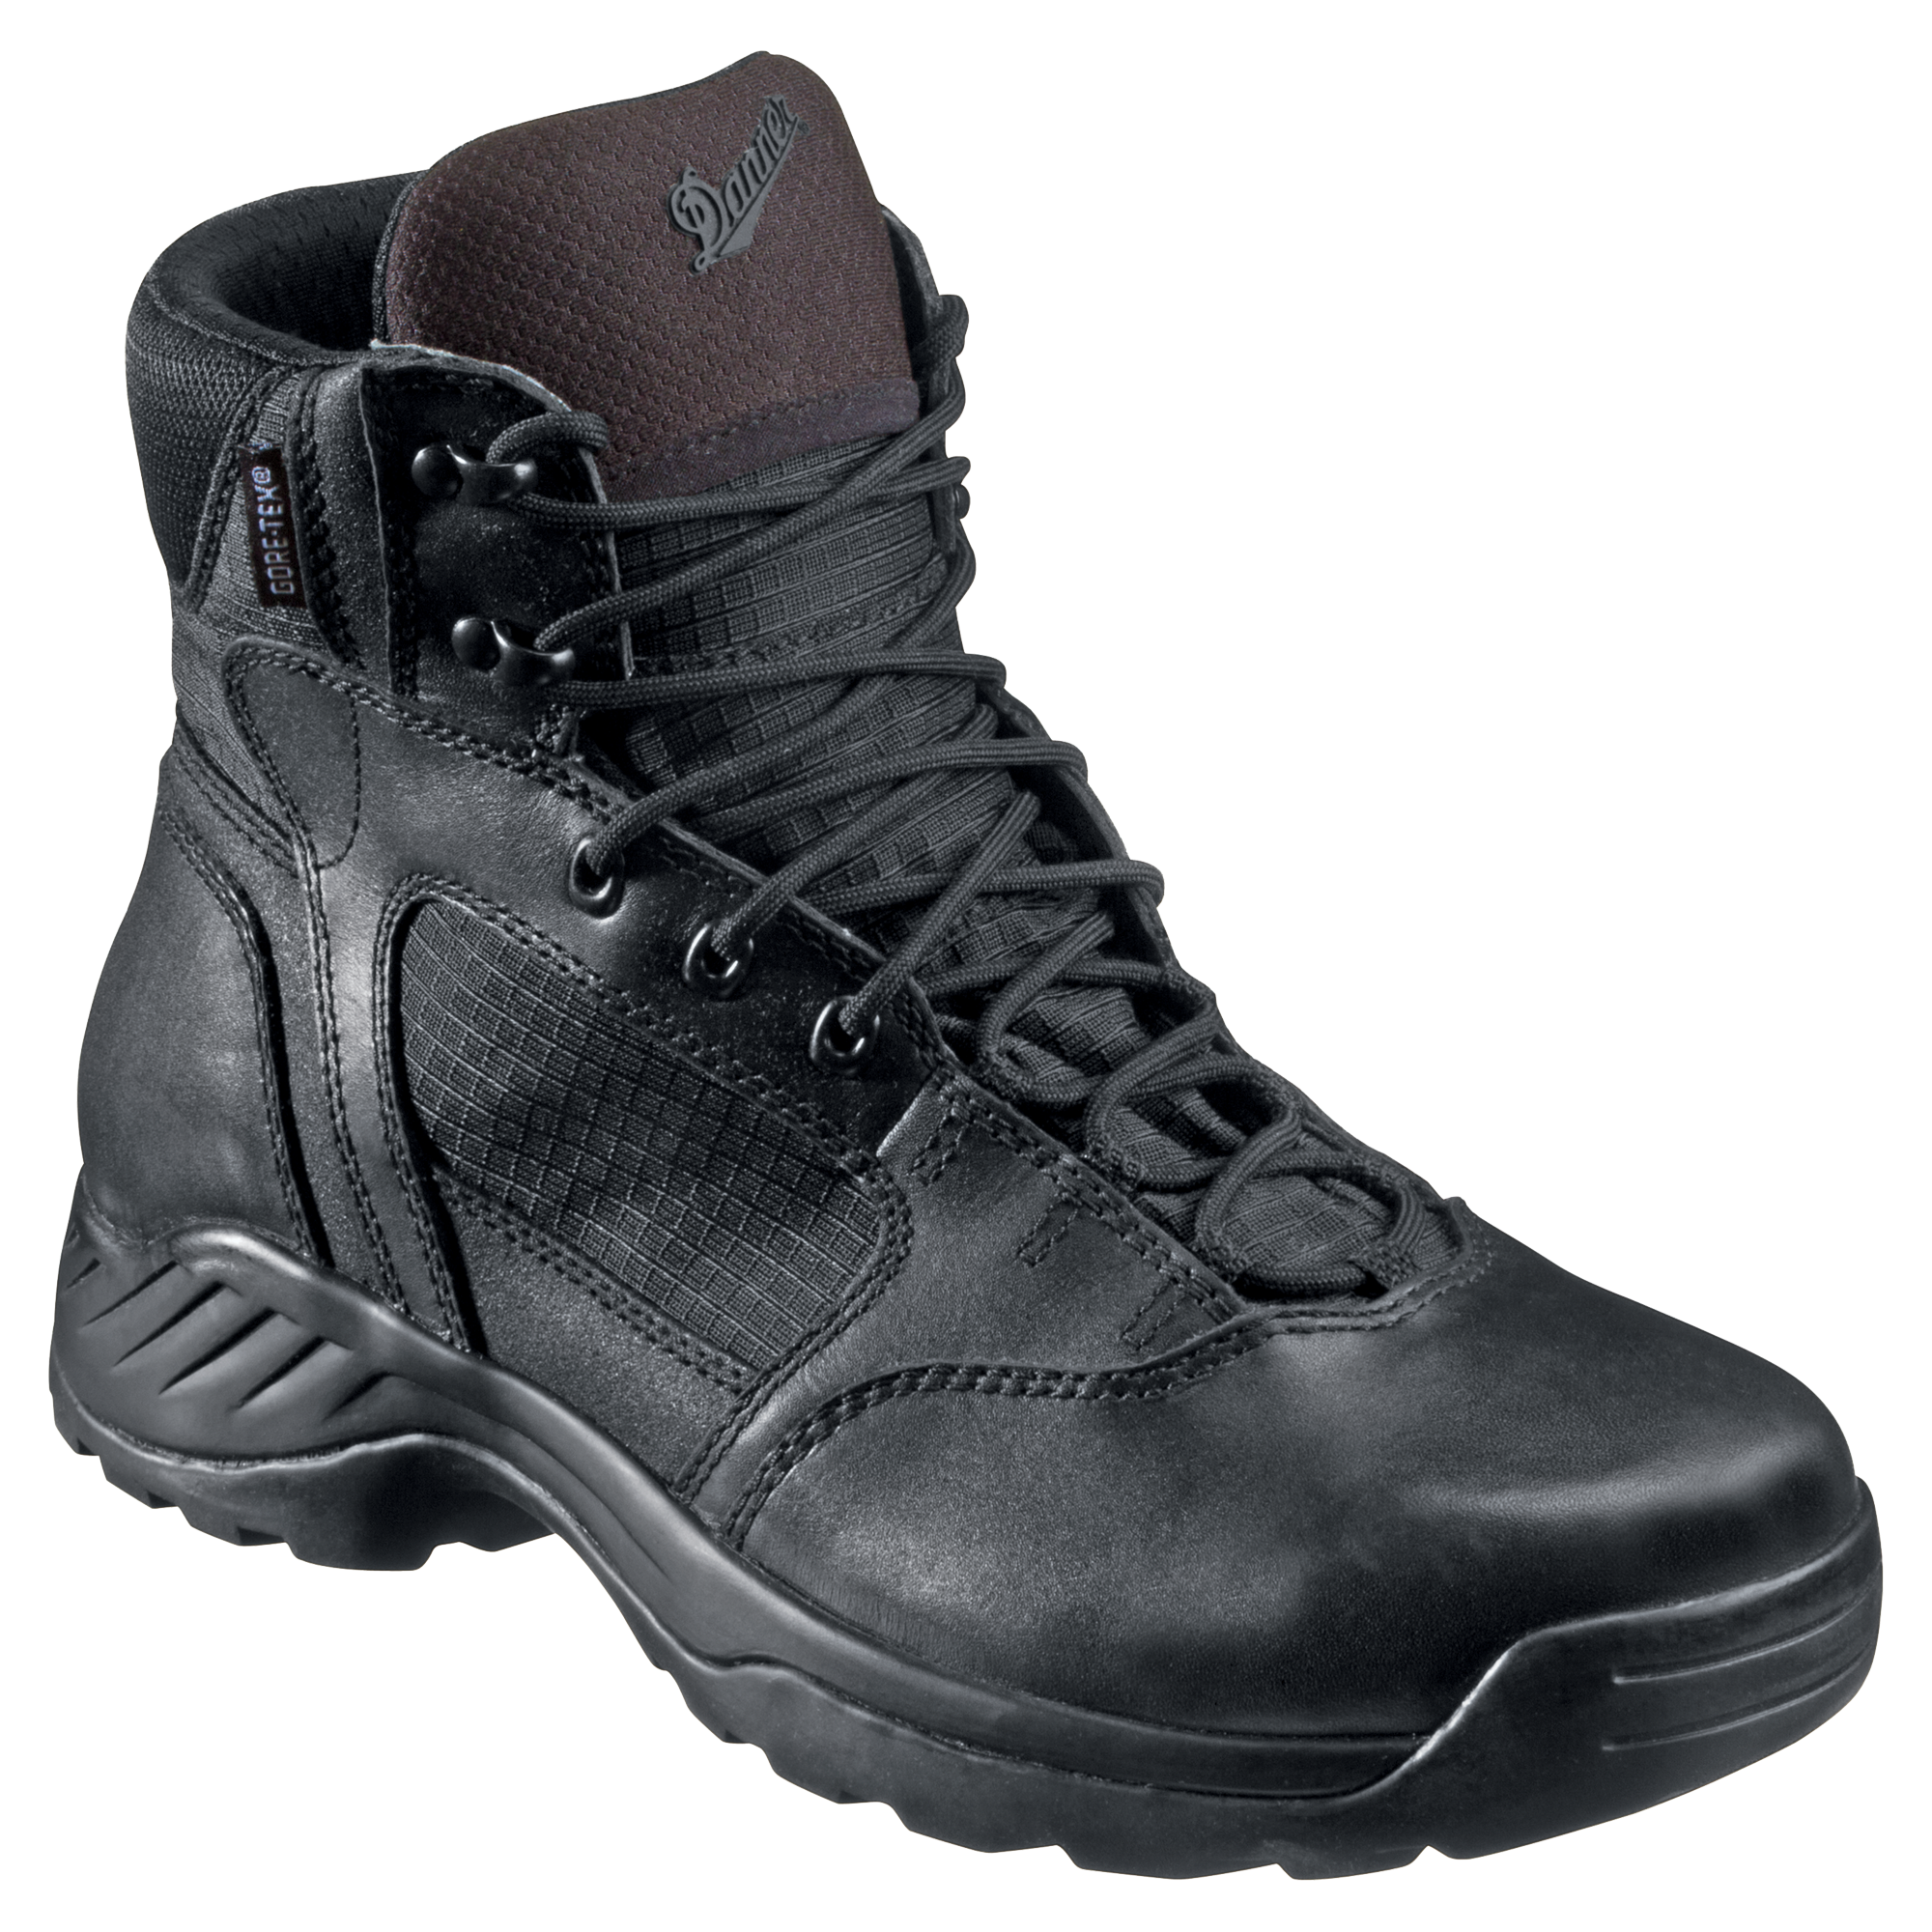 Danner Kinetic Side-Zip GORE-TEX Work Boots for Men - Black - 8M